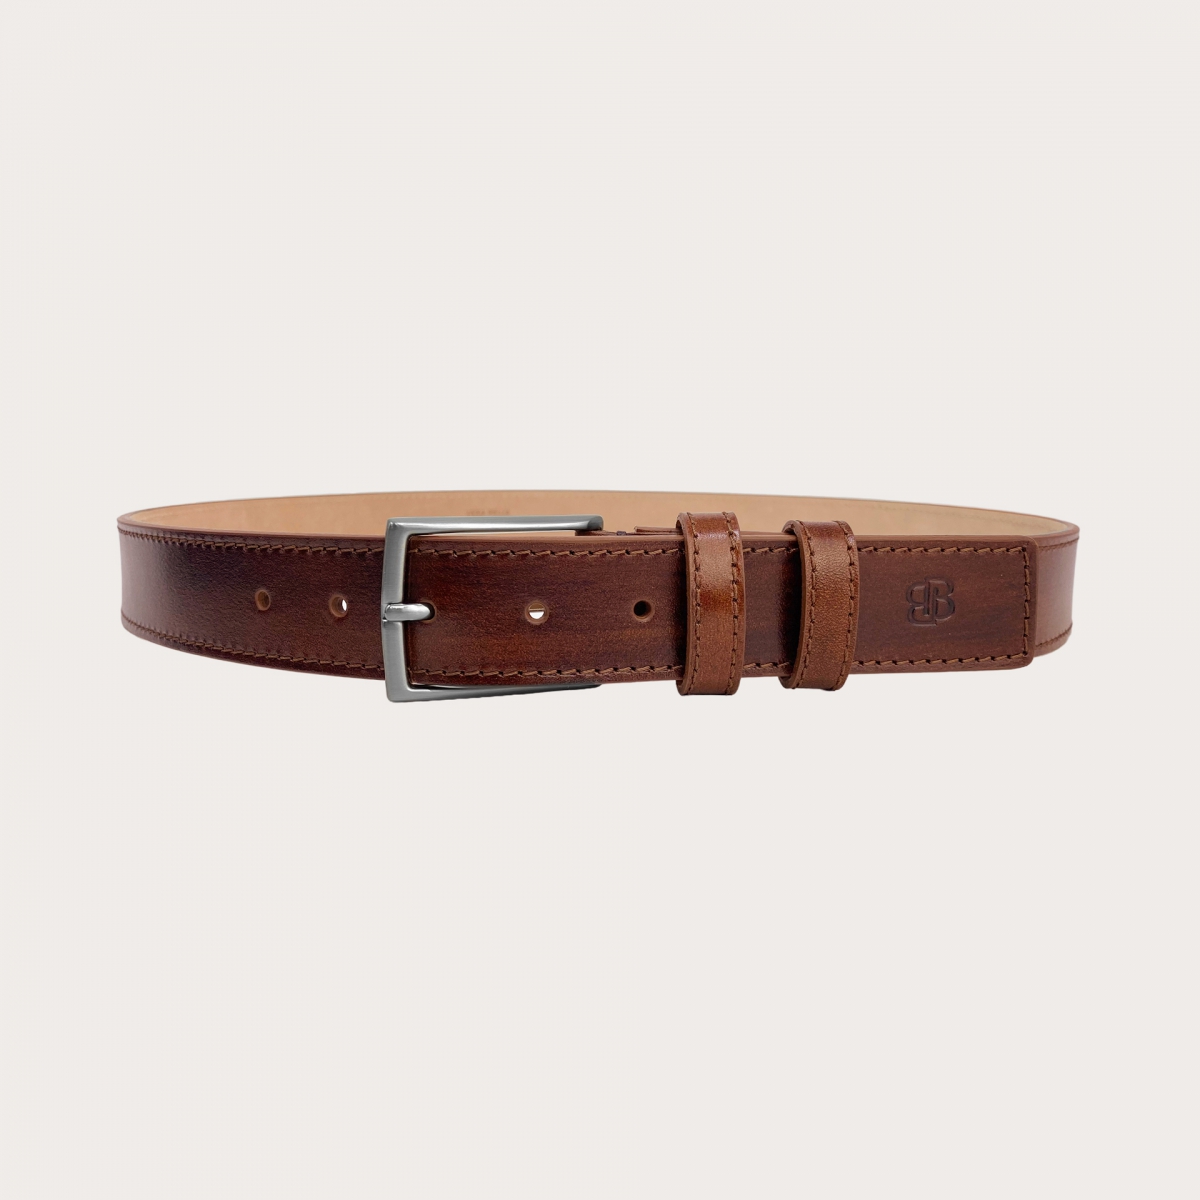 Genuine handbuffered leather belt, brown cognac